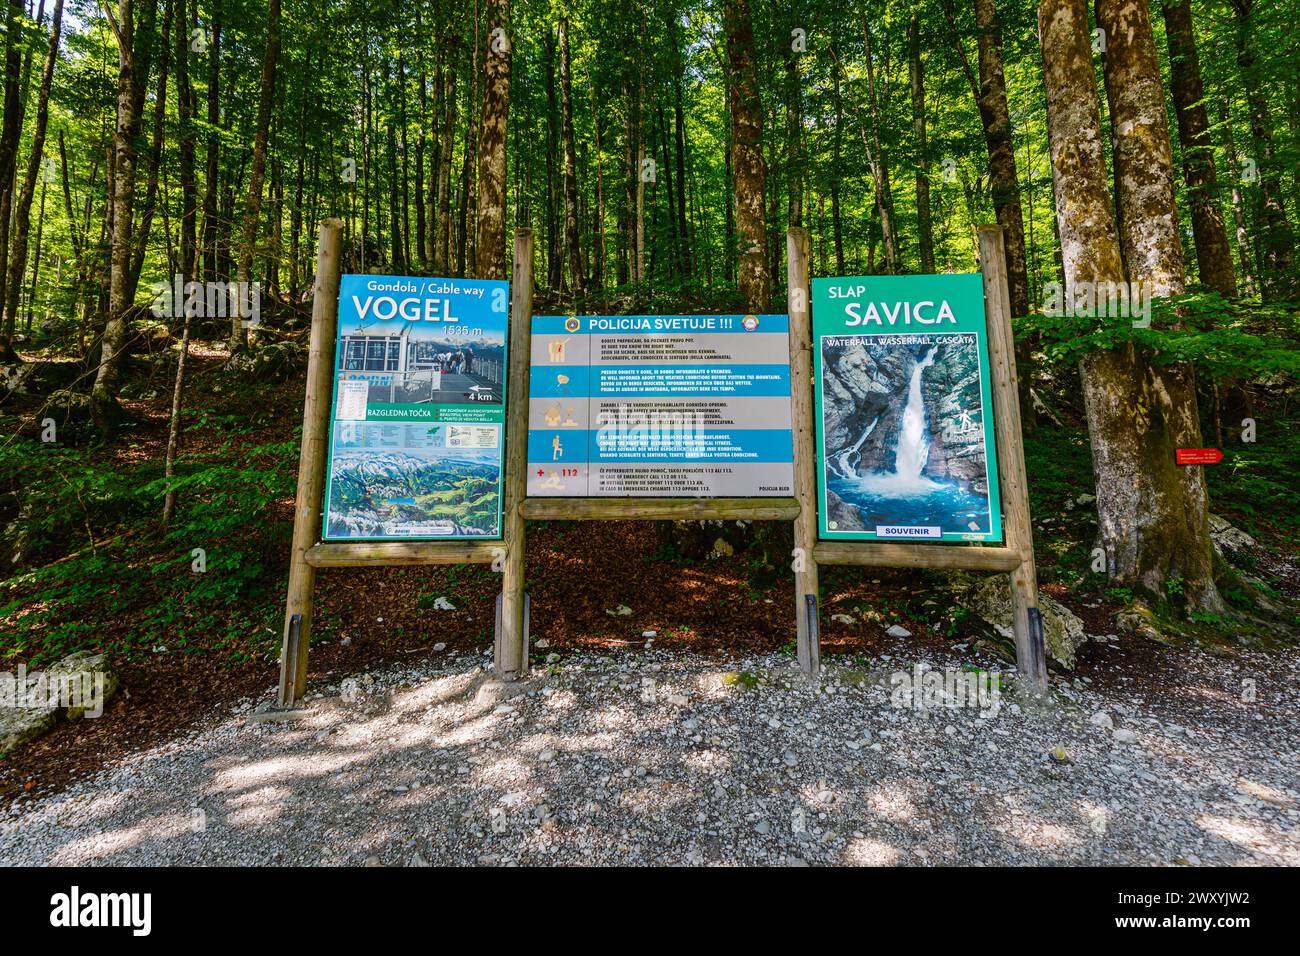 Sign at Slap Savica (Savica Falls) at Lake Boninj, a popular tourist attraction in north-west Slovenia, central & eastern Europe Stock Photo